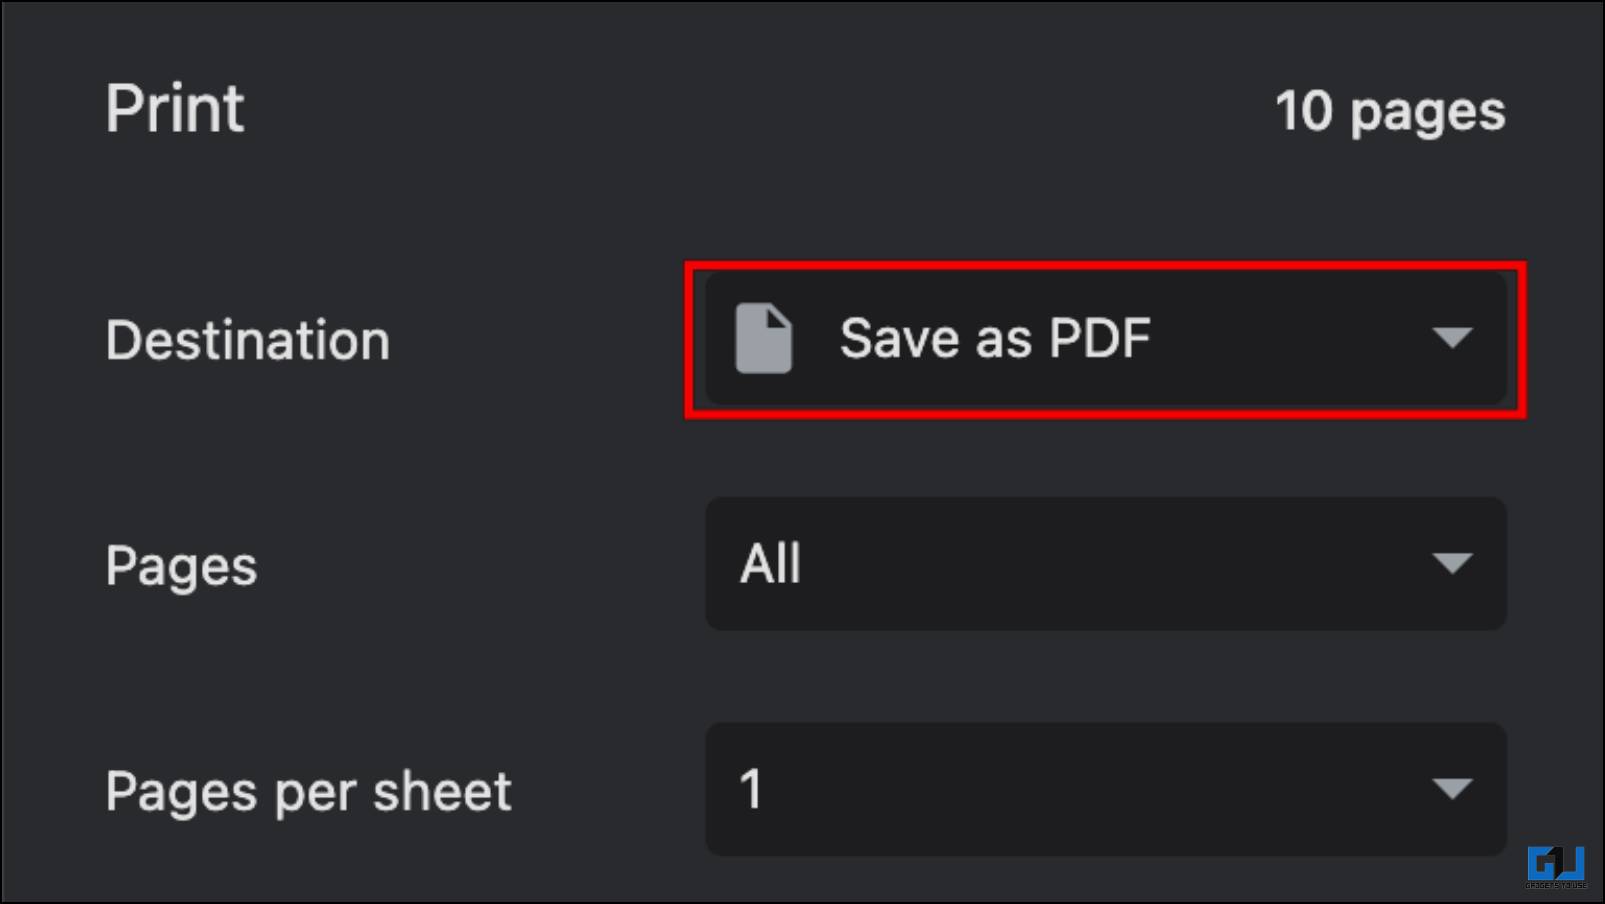 Choose Save as PDF from the Destination Menu